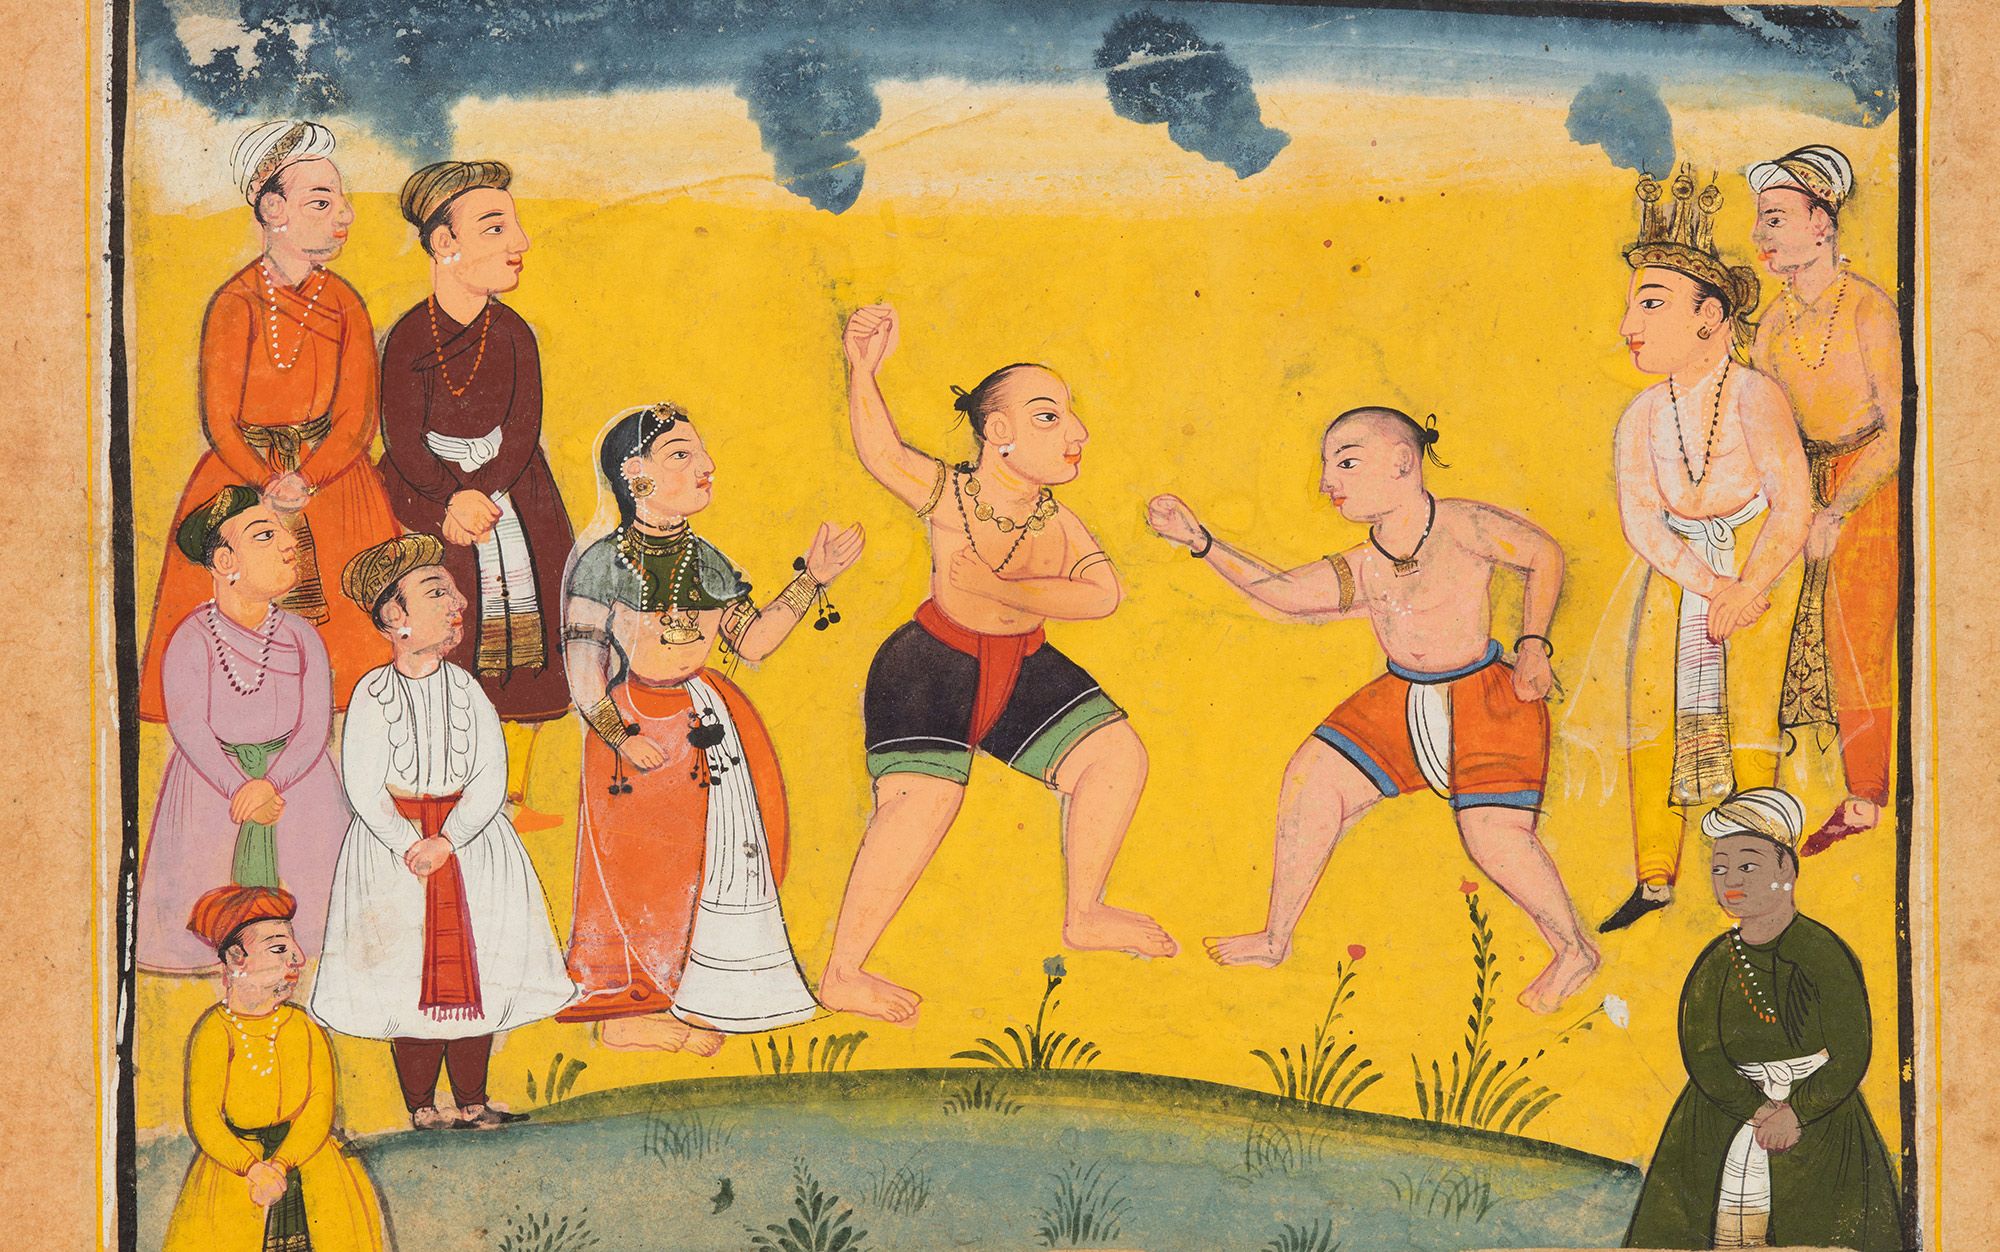 The Indian epic Mahabharata imparts a dark